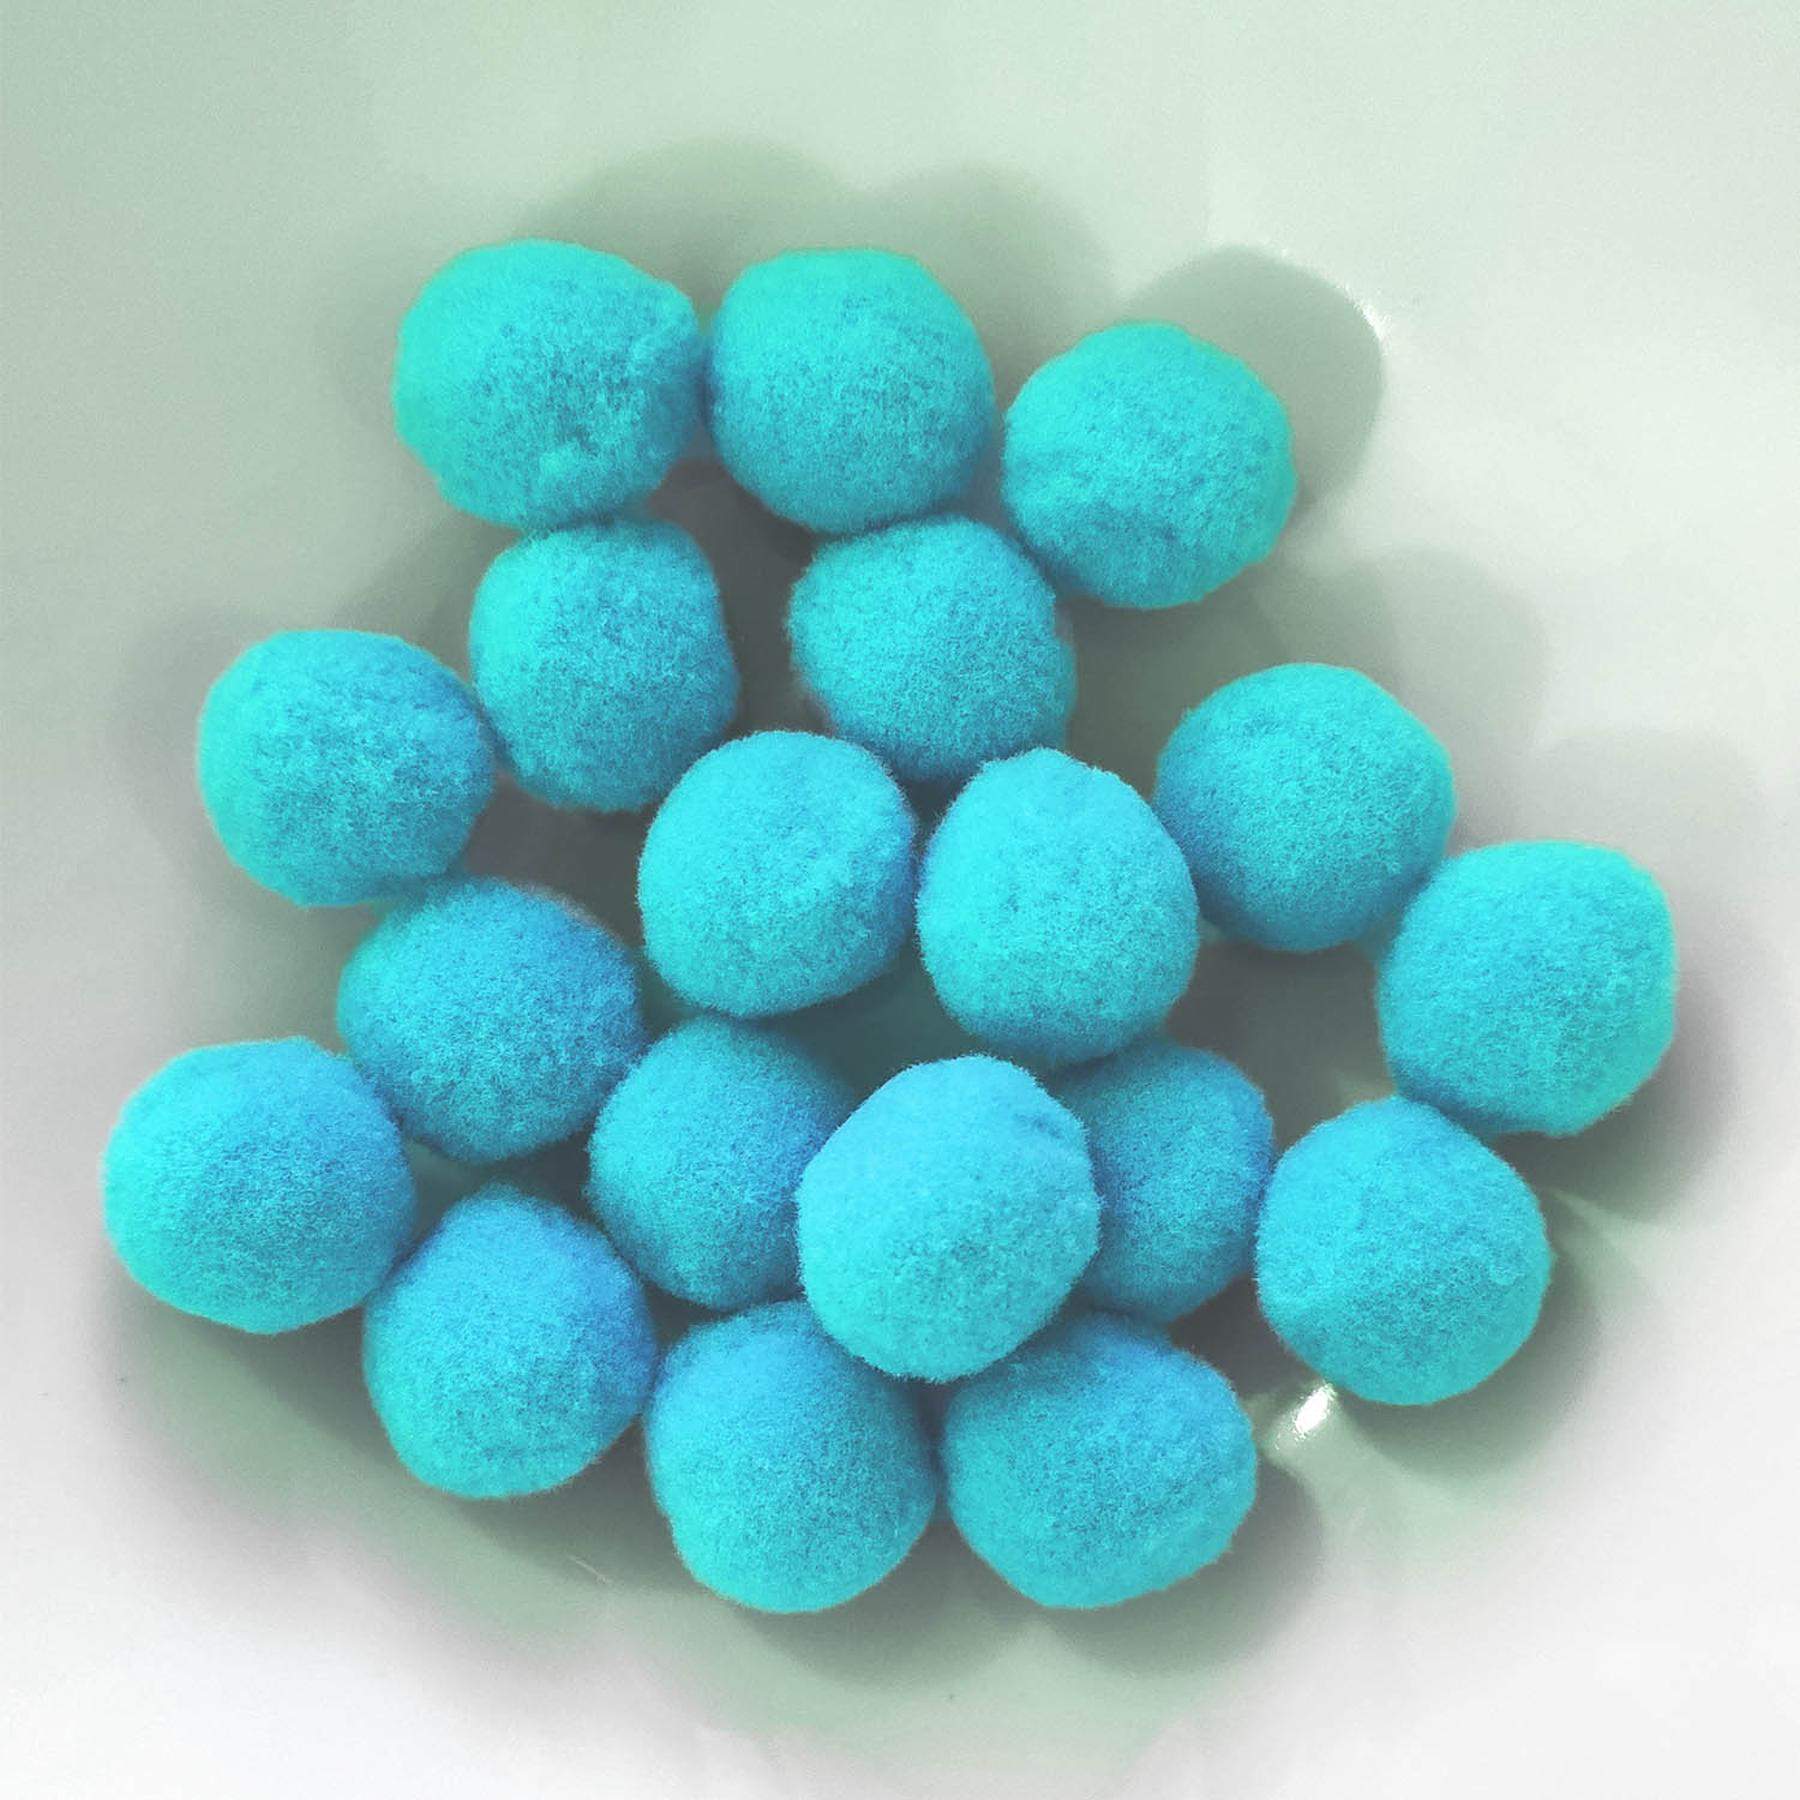 PomPon / Bälle aus Baumwolle - 20 mm / 25er Set - Blau hell / Himmelblau